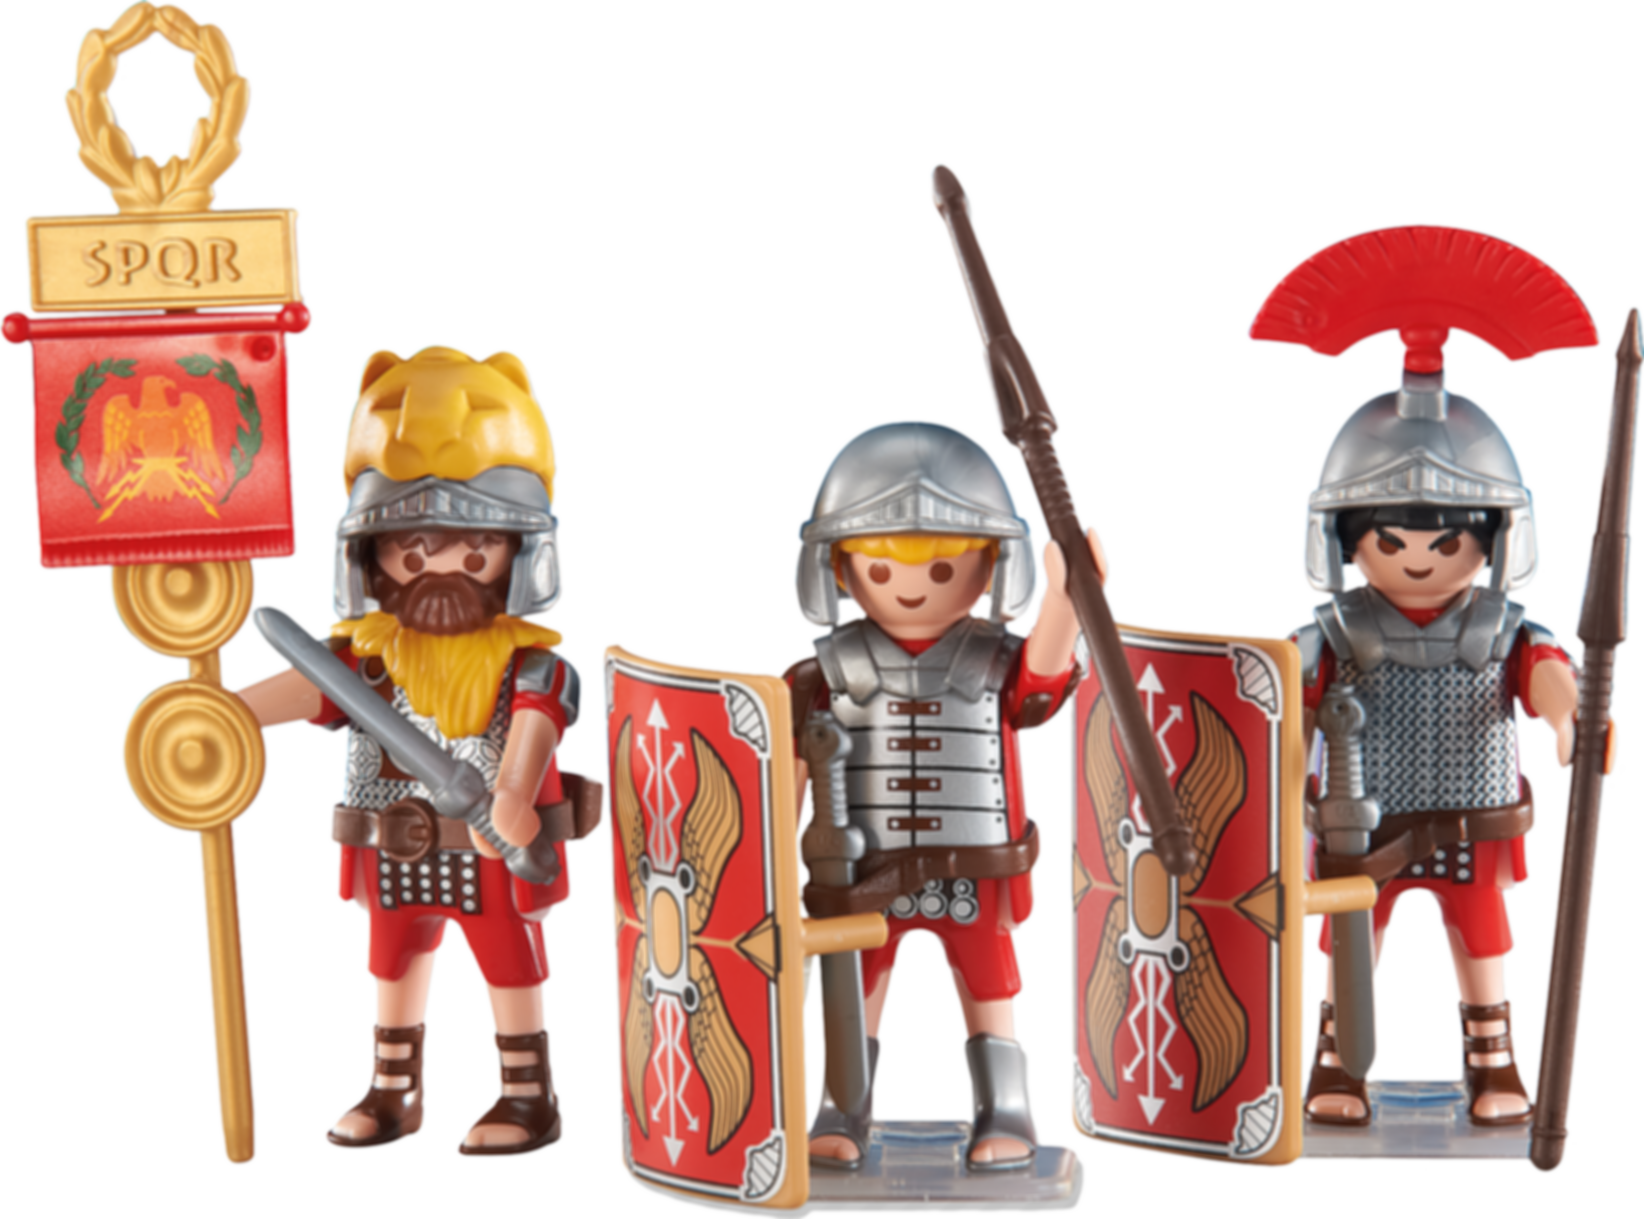 3 Roman Soldiers minifigures